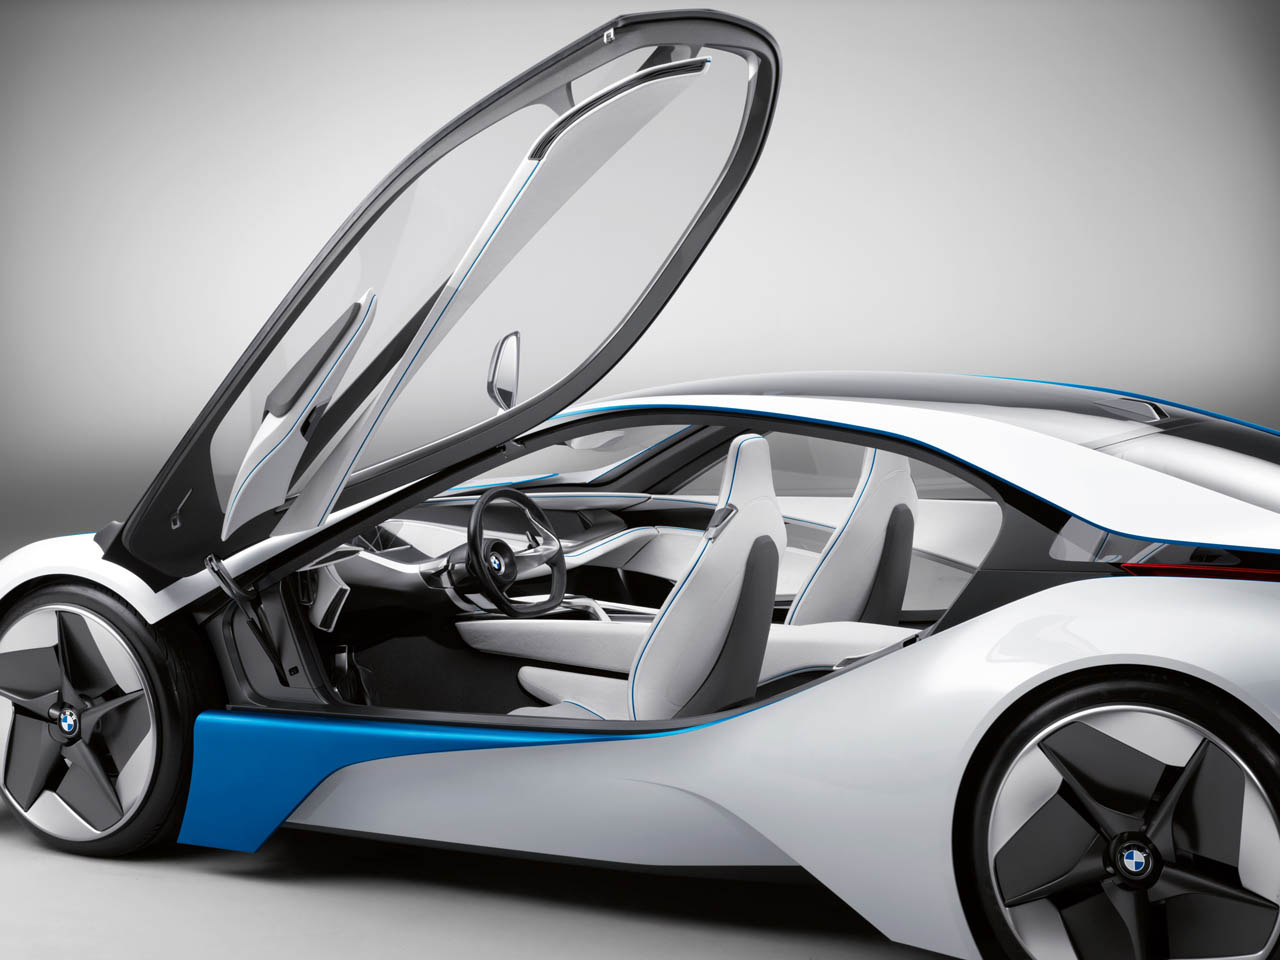 Opening the door - BMW Vision Efficient